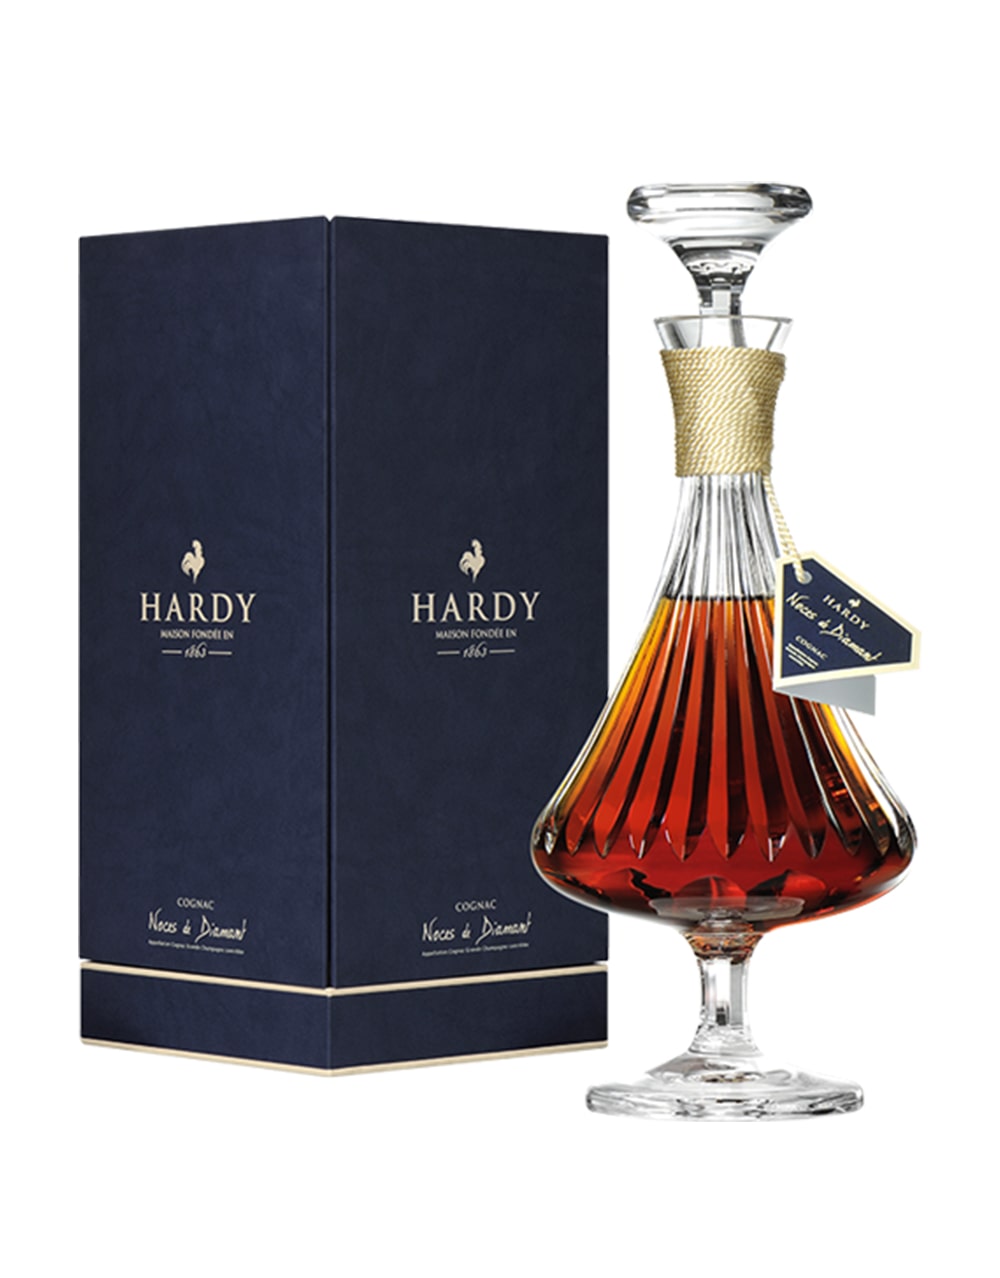 Hardy Noces Diamant 60 Year Old Cognac